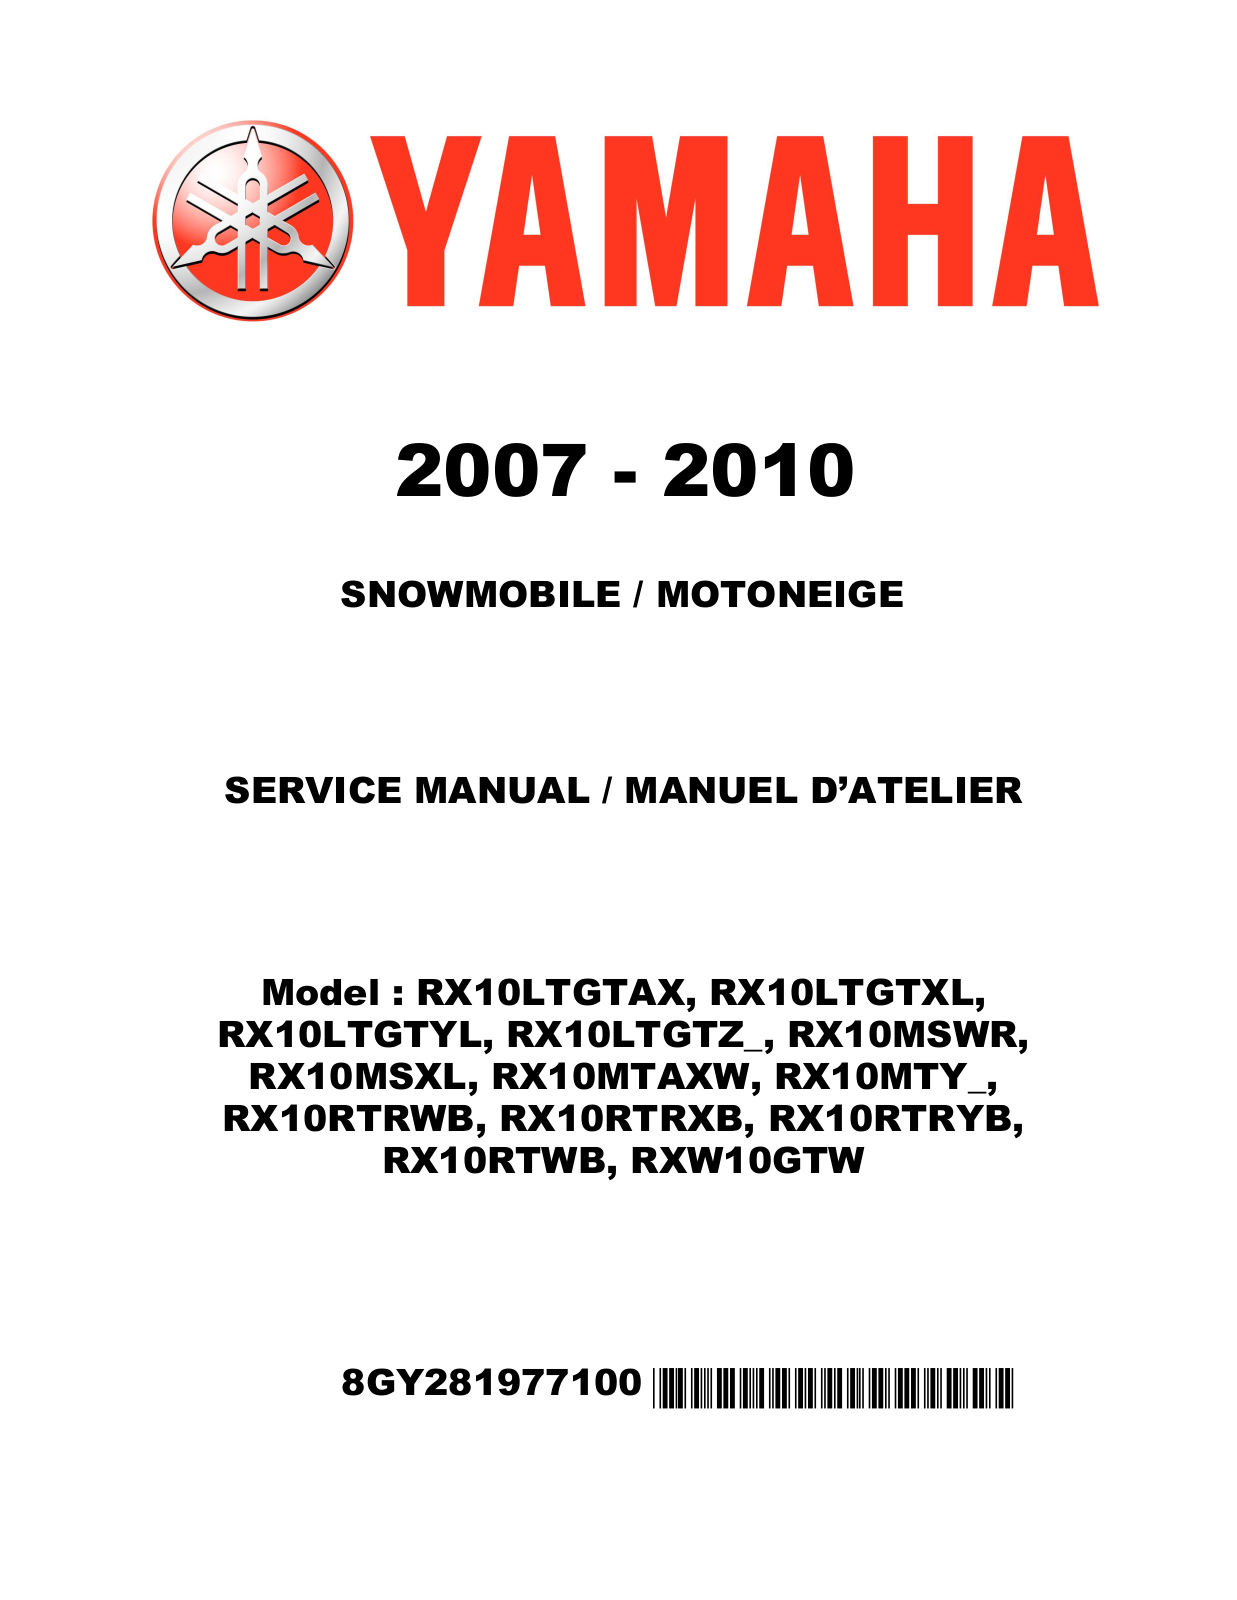 Yamaha RX10MTY Series, RX10LTGTAX, RX10RTRWB, RX10RTRXB, RX10RTRYB Service Manual